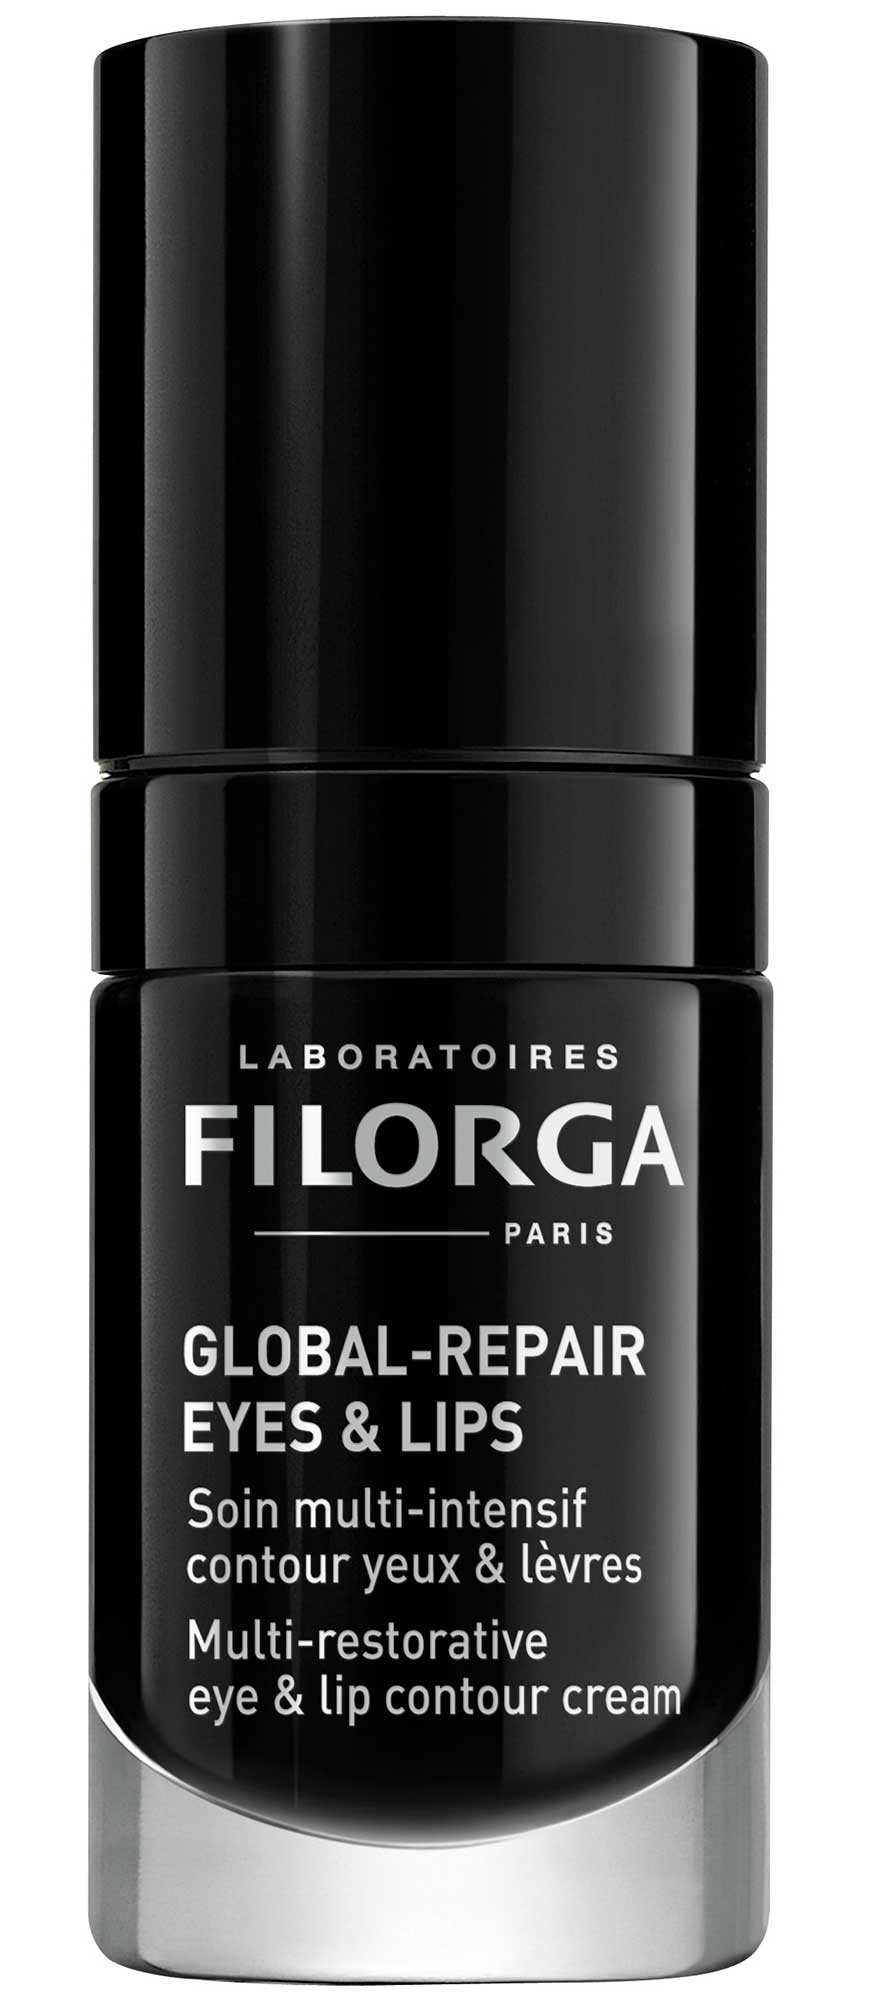 Filorga Global-repair Eyes & Lips